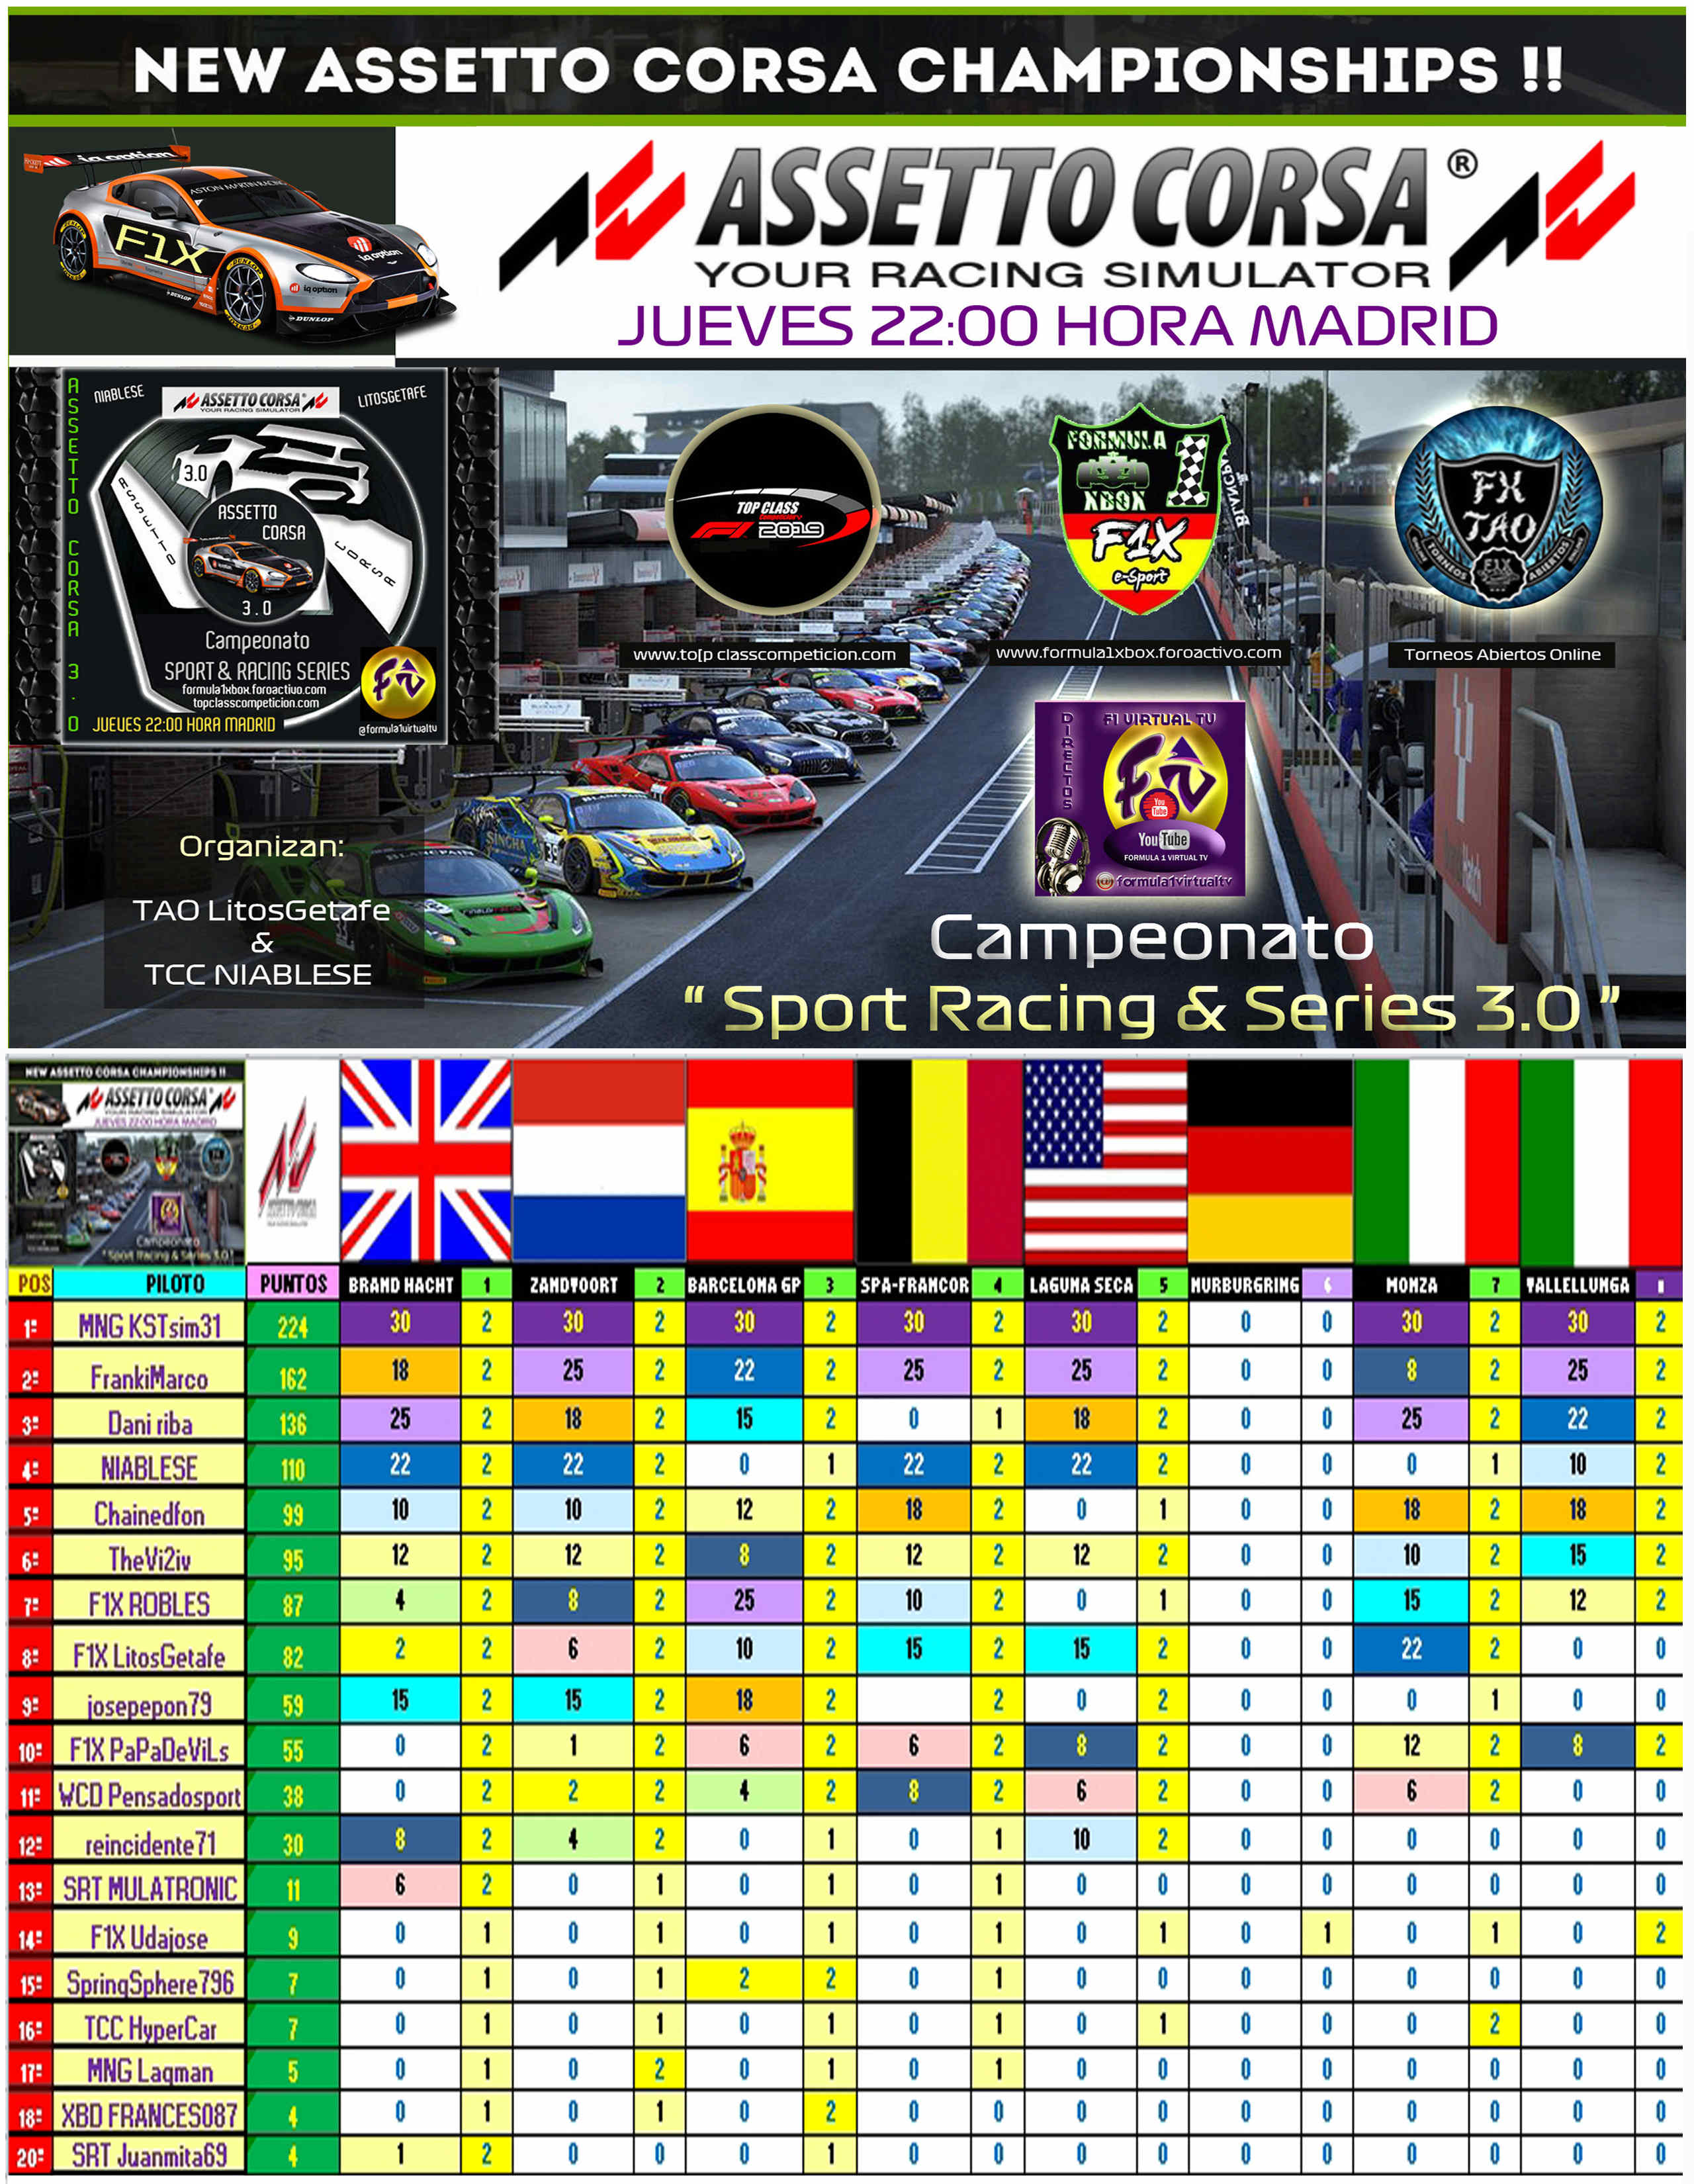 ASSETTO CORSA /// CAMPEONATO SPORT & RACING SERIES 3.0 /// RACE 8 VALLELLUNGA - RESULTADOS + PODIUM + CLASIFICACION GENERAL Genera10